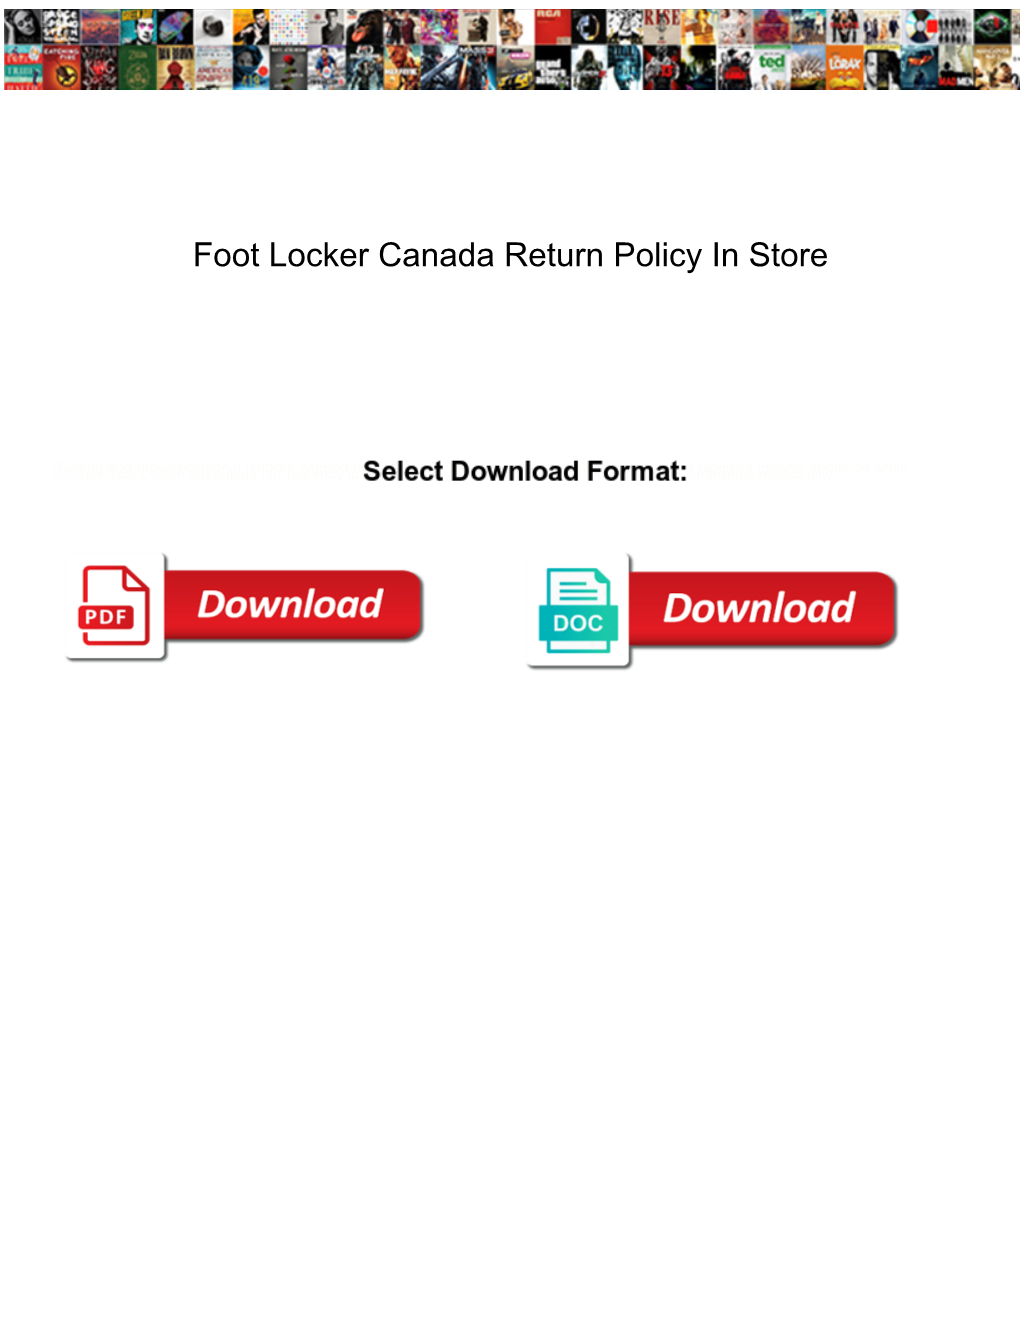 Foot Locker Canada Return Policy in Store